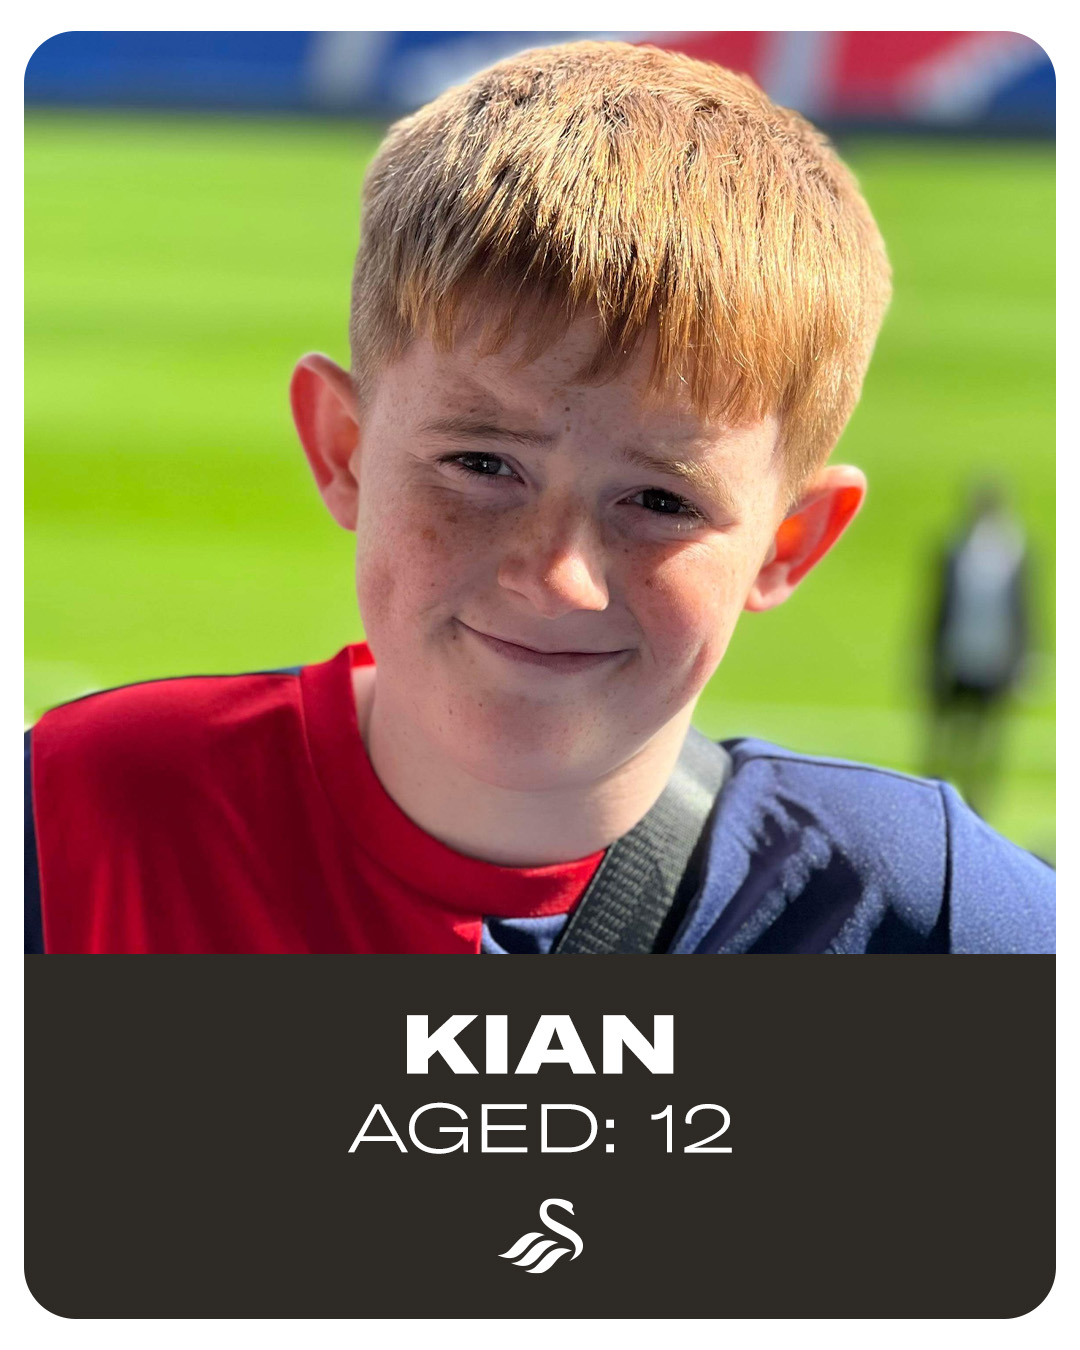 Photograph of Kian, aged 12